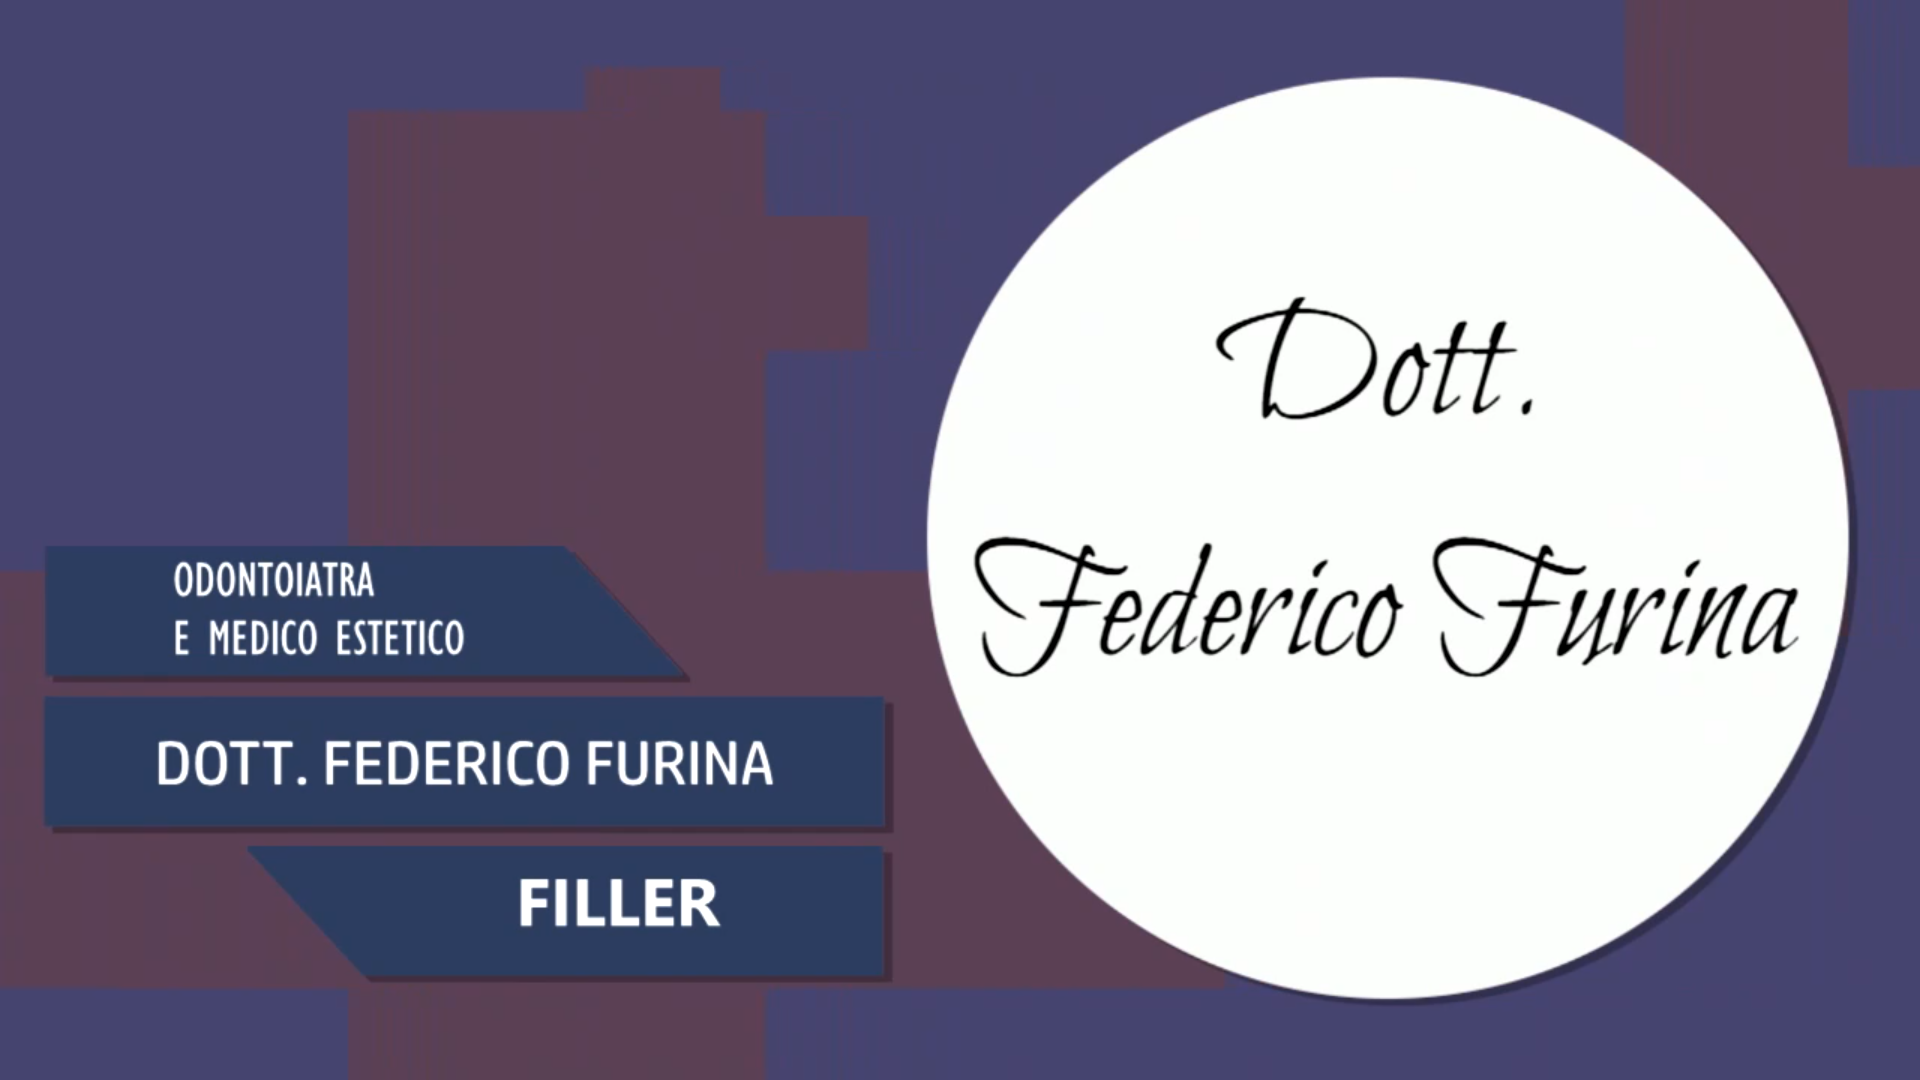 Intervista al Dott. Federico Furina – Filler